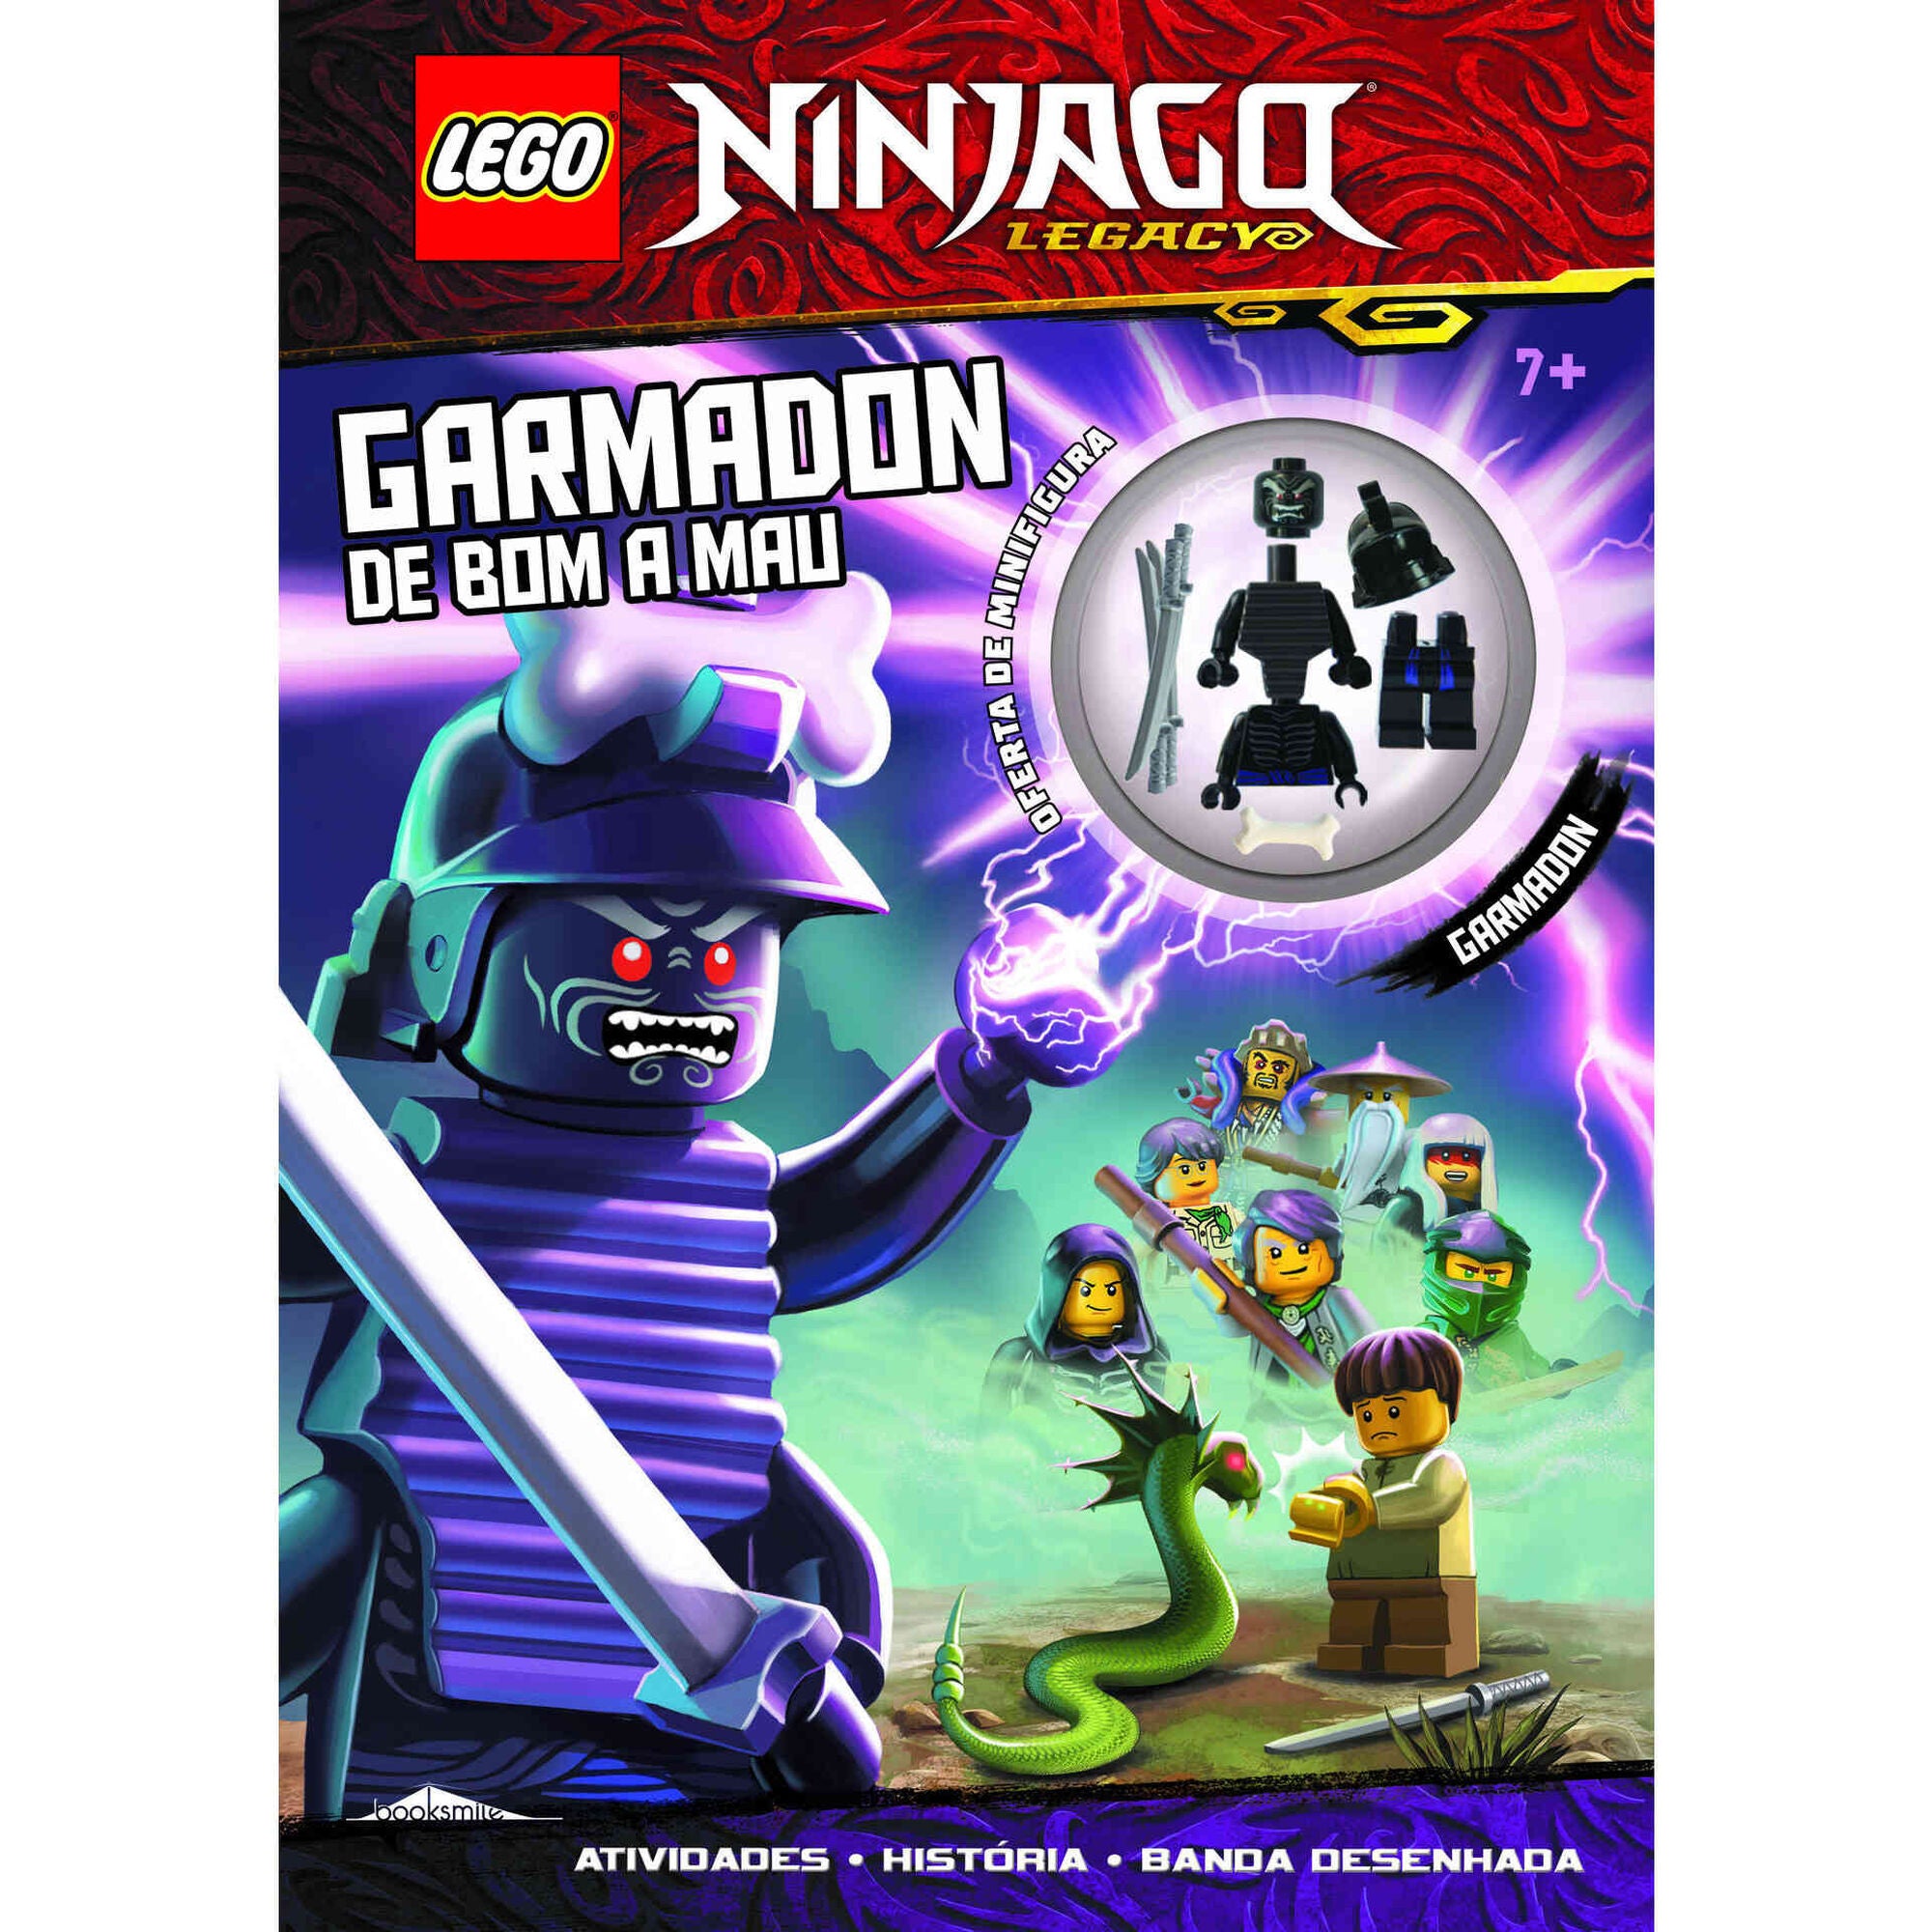 LEGO Ninjago Garmadon - De bom a mau